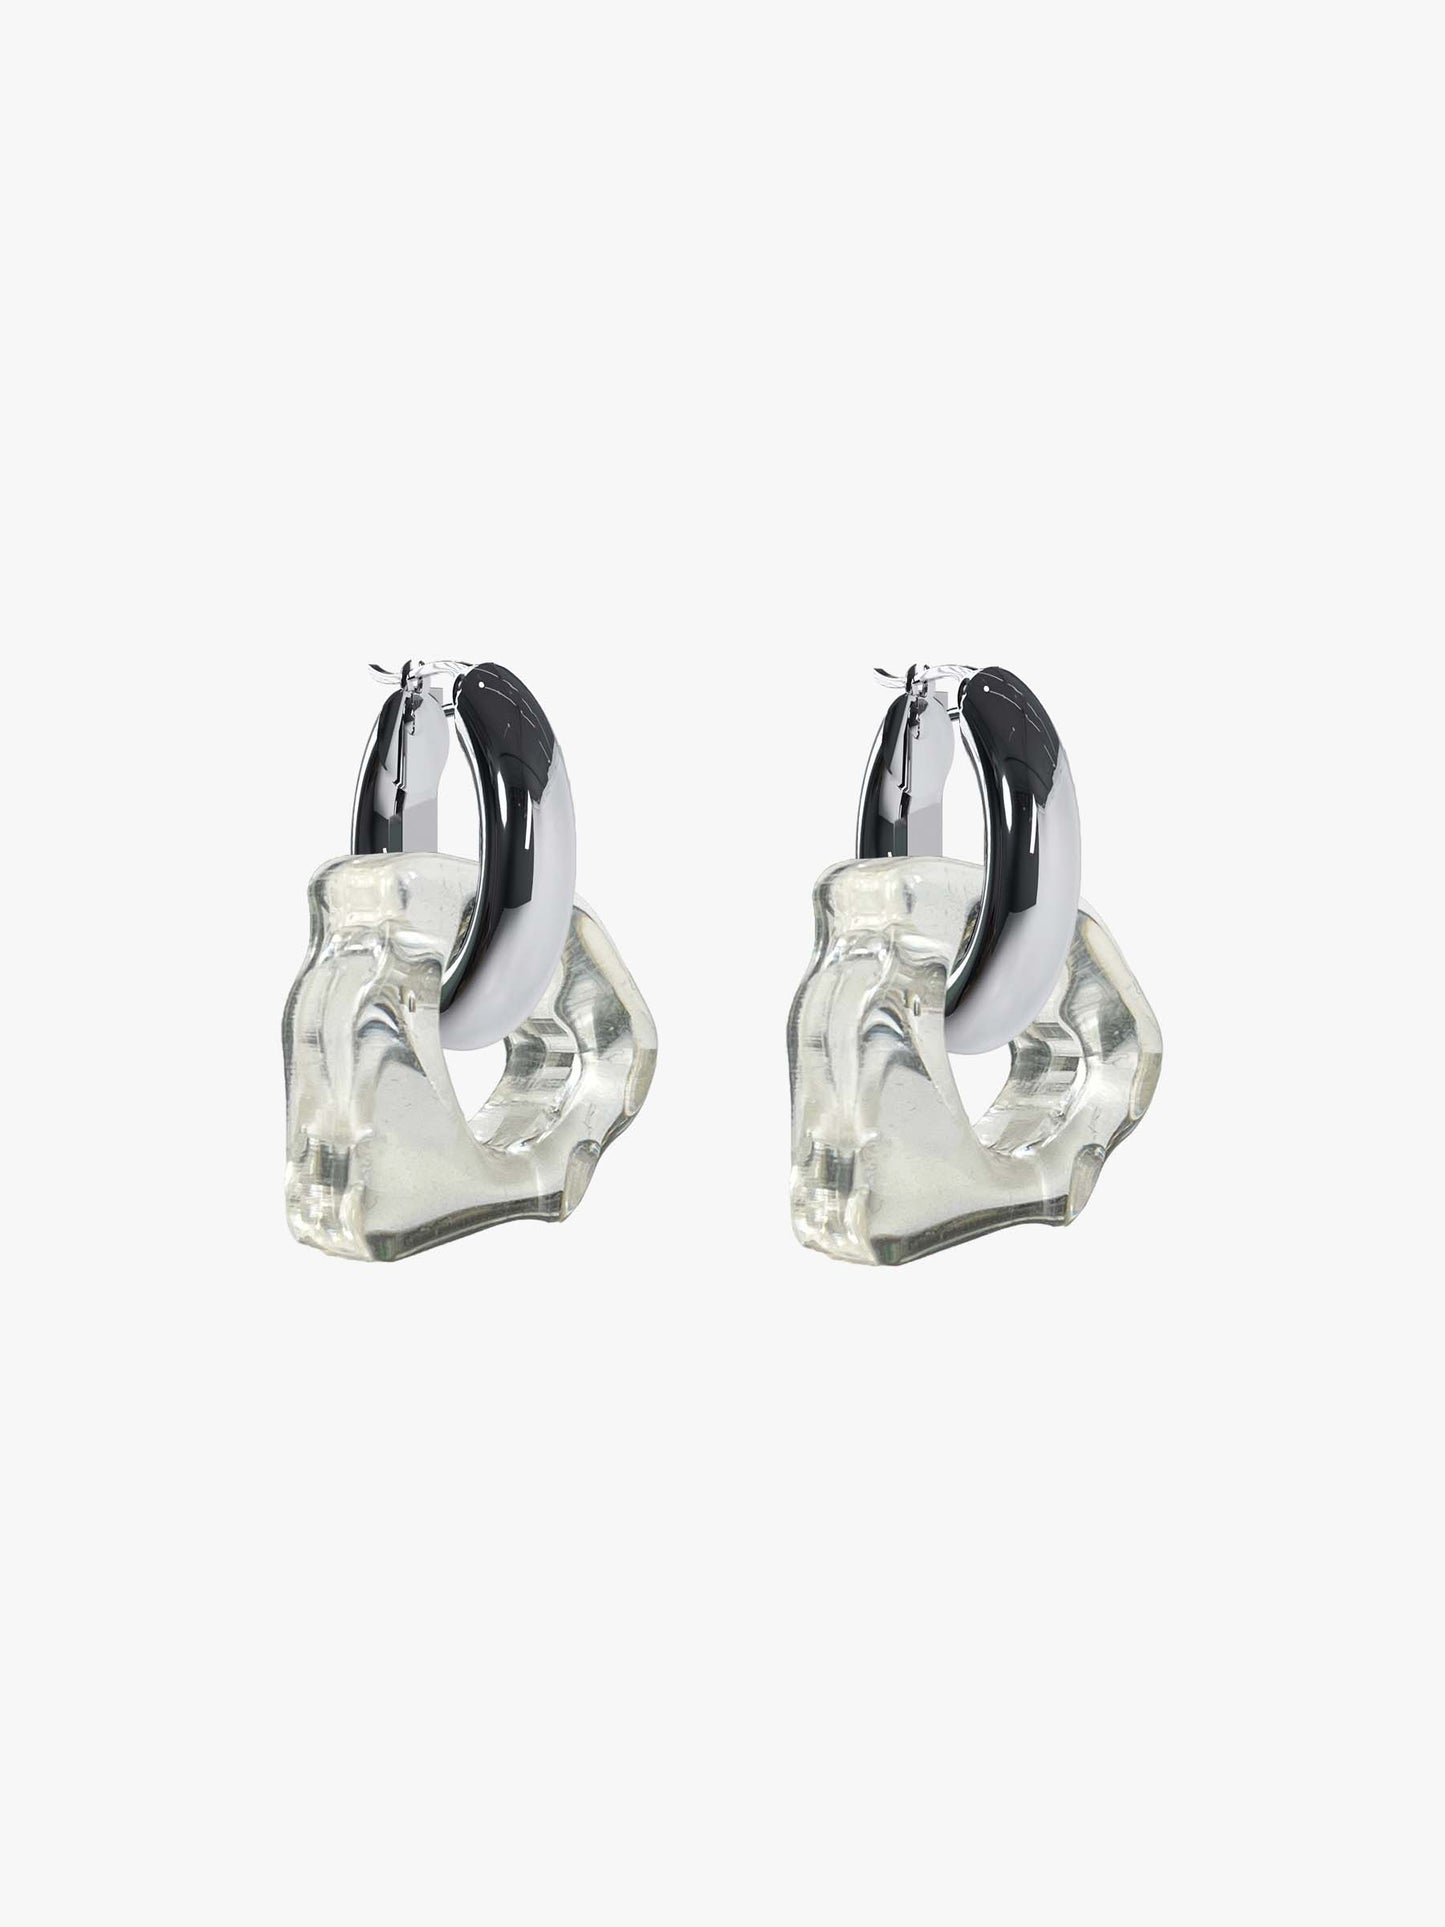 Ora transparant silver earring (pair)